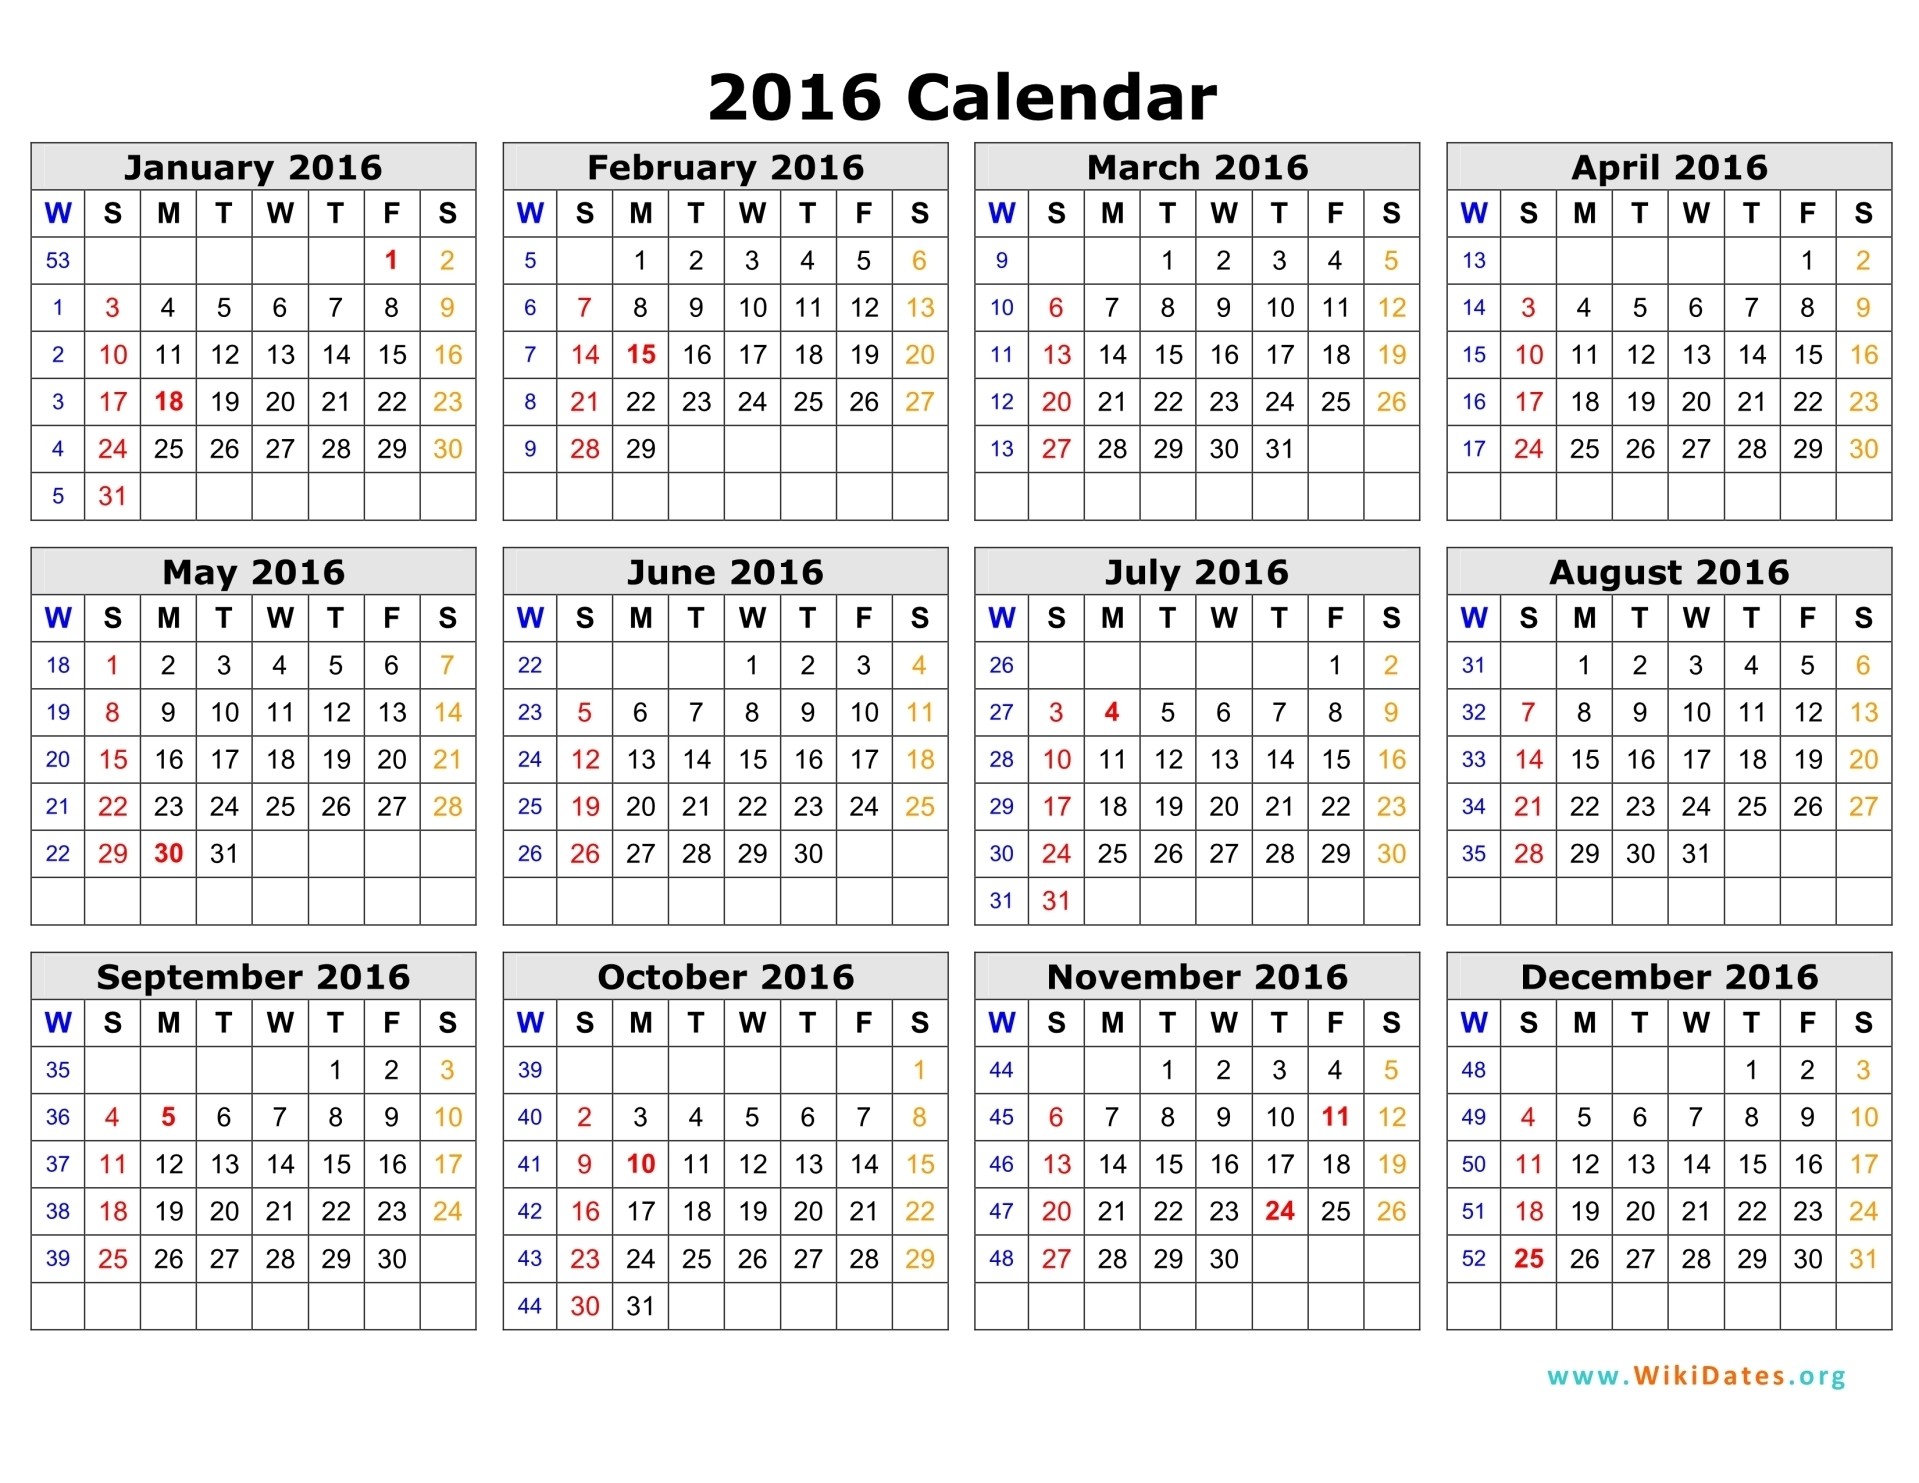 2016 Calendar WikiDates Org Download 2017 Word